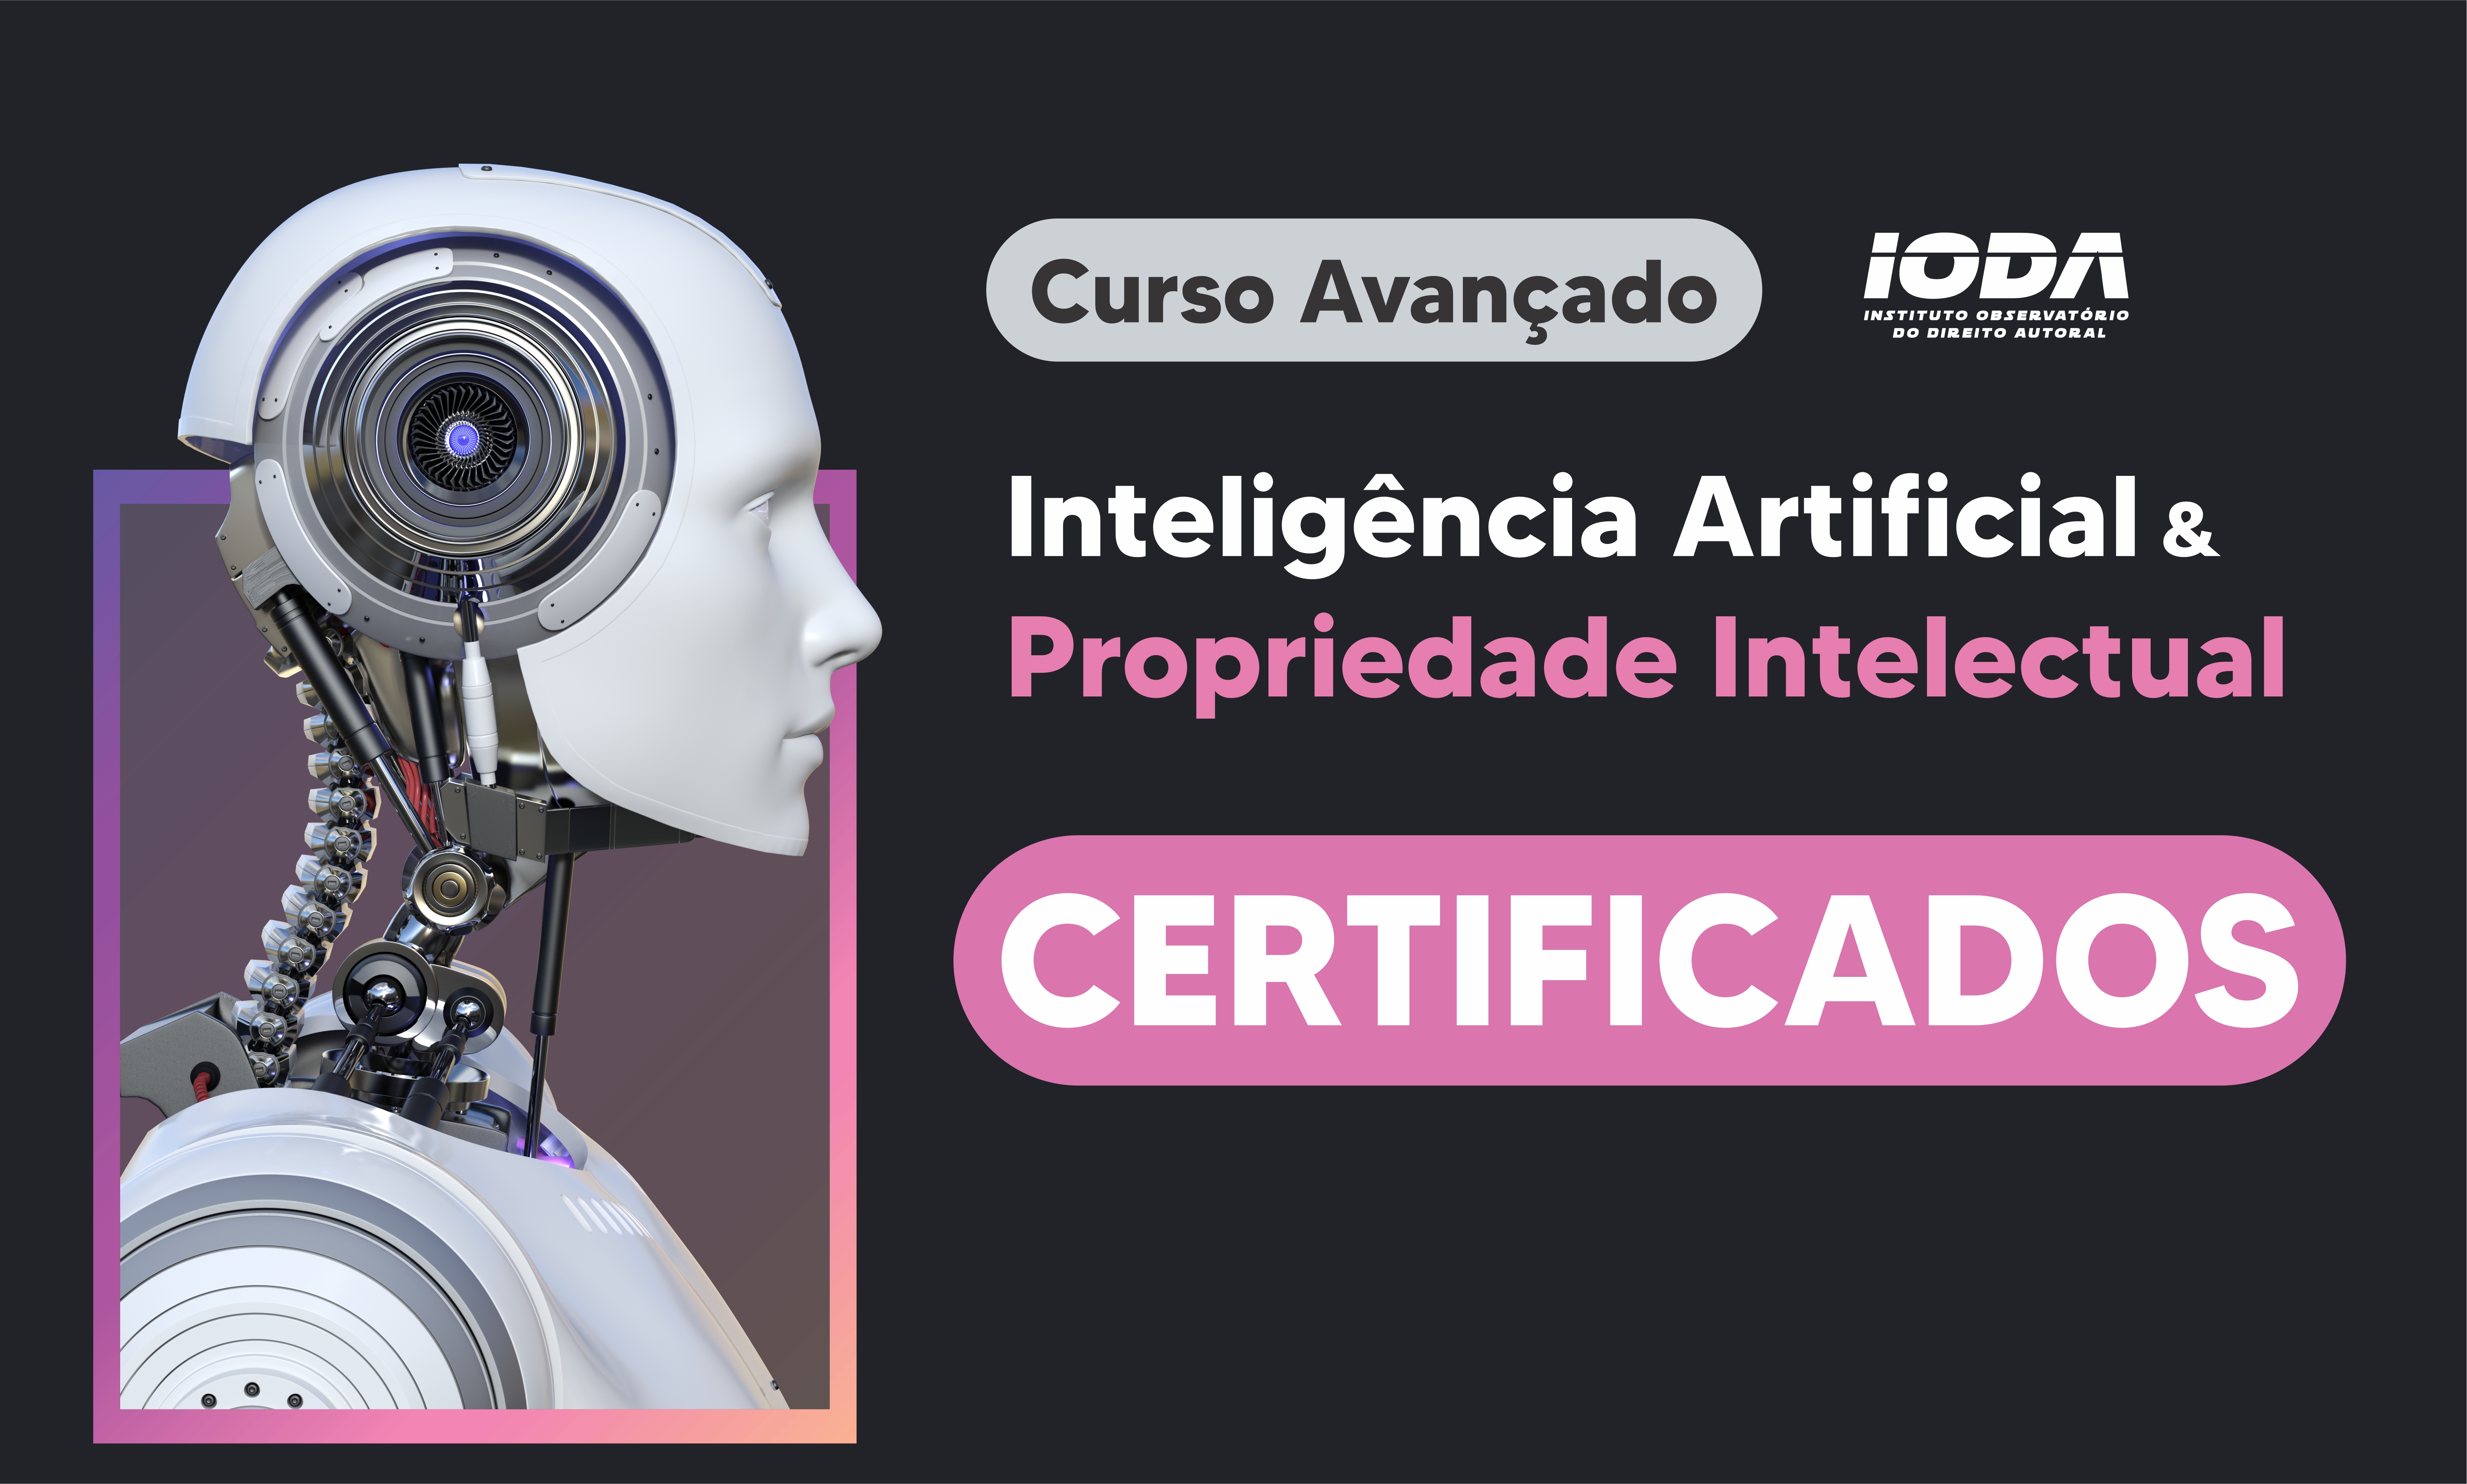 Certificados Curso Avançado Inteligência Artificial & Propriedade Intelectual